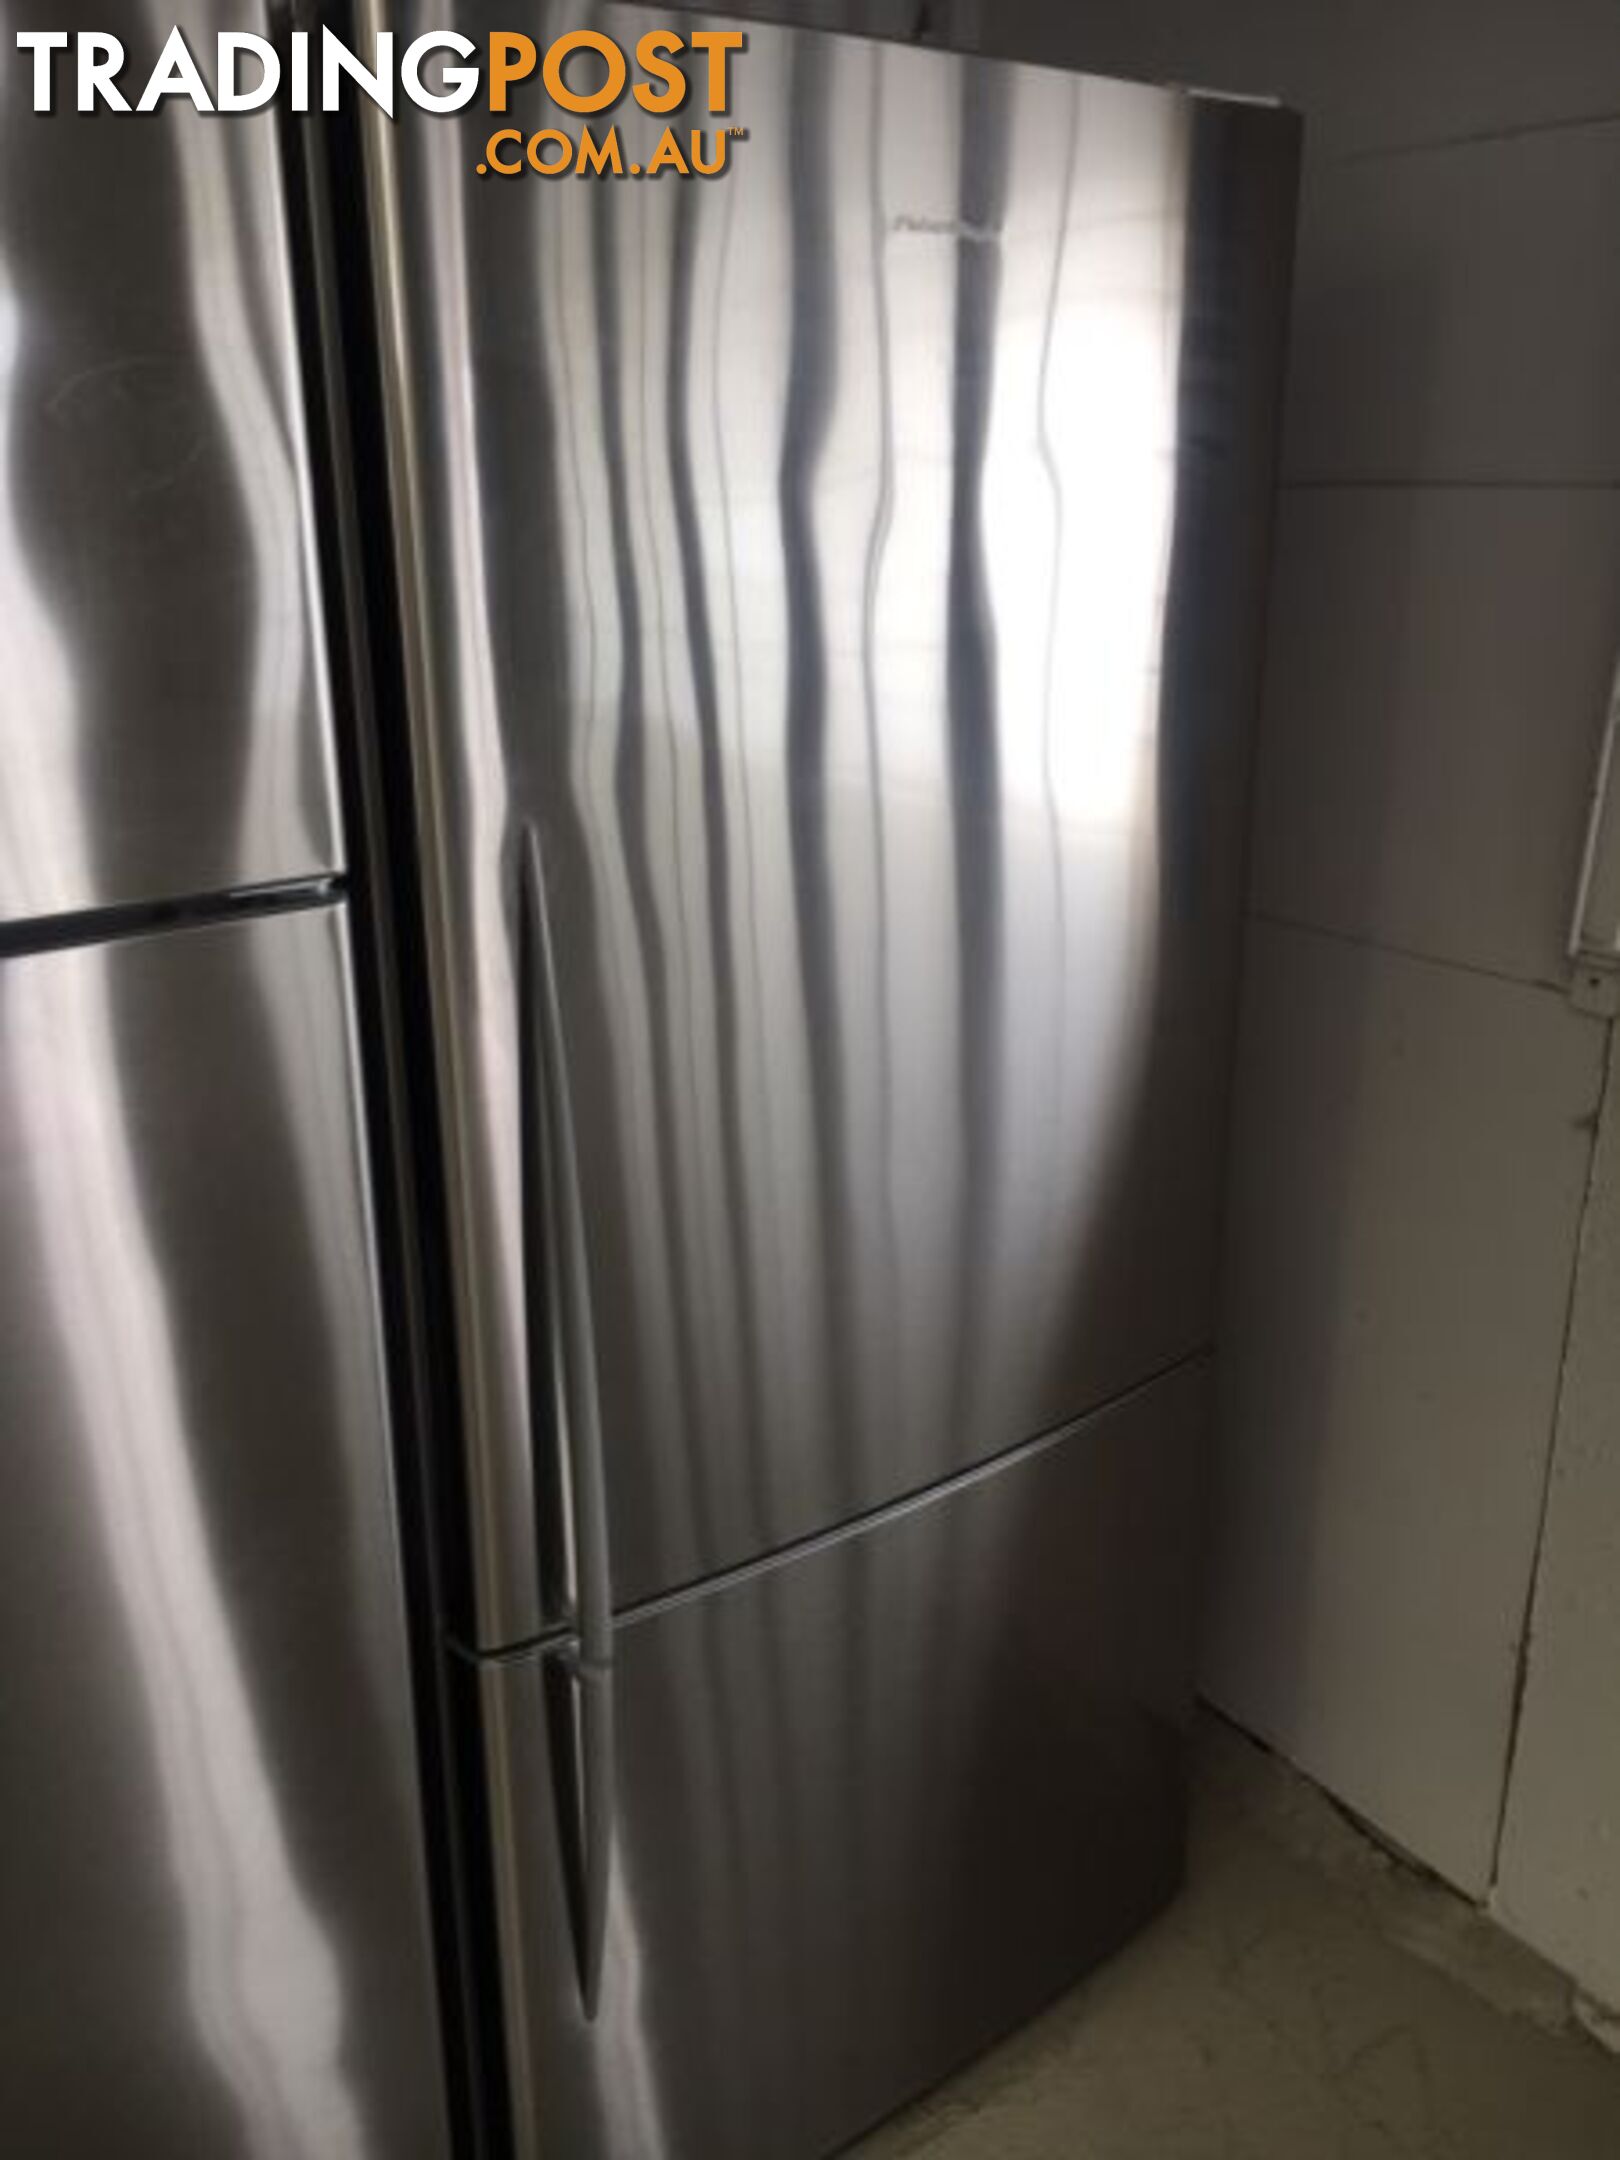 519l Fisher&Paykel fridge freezer DELIVERY WARRANTY